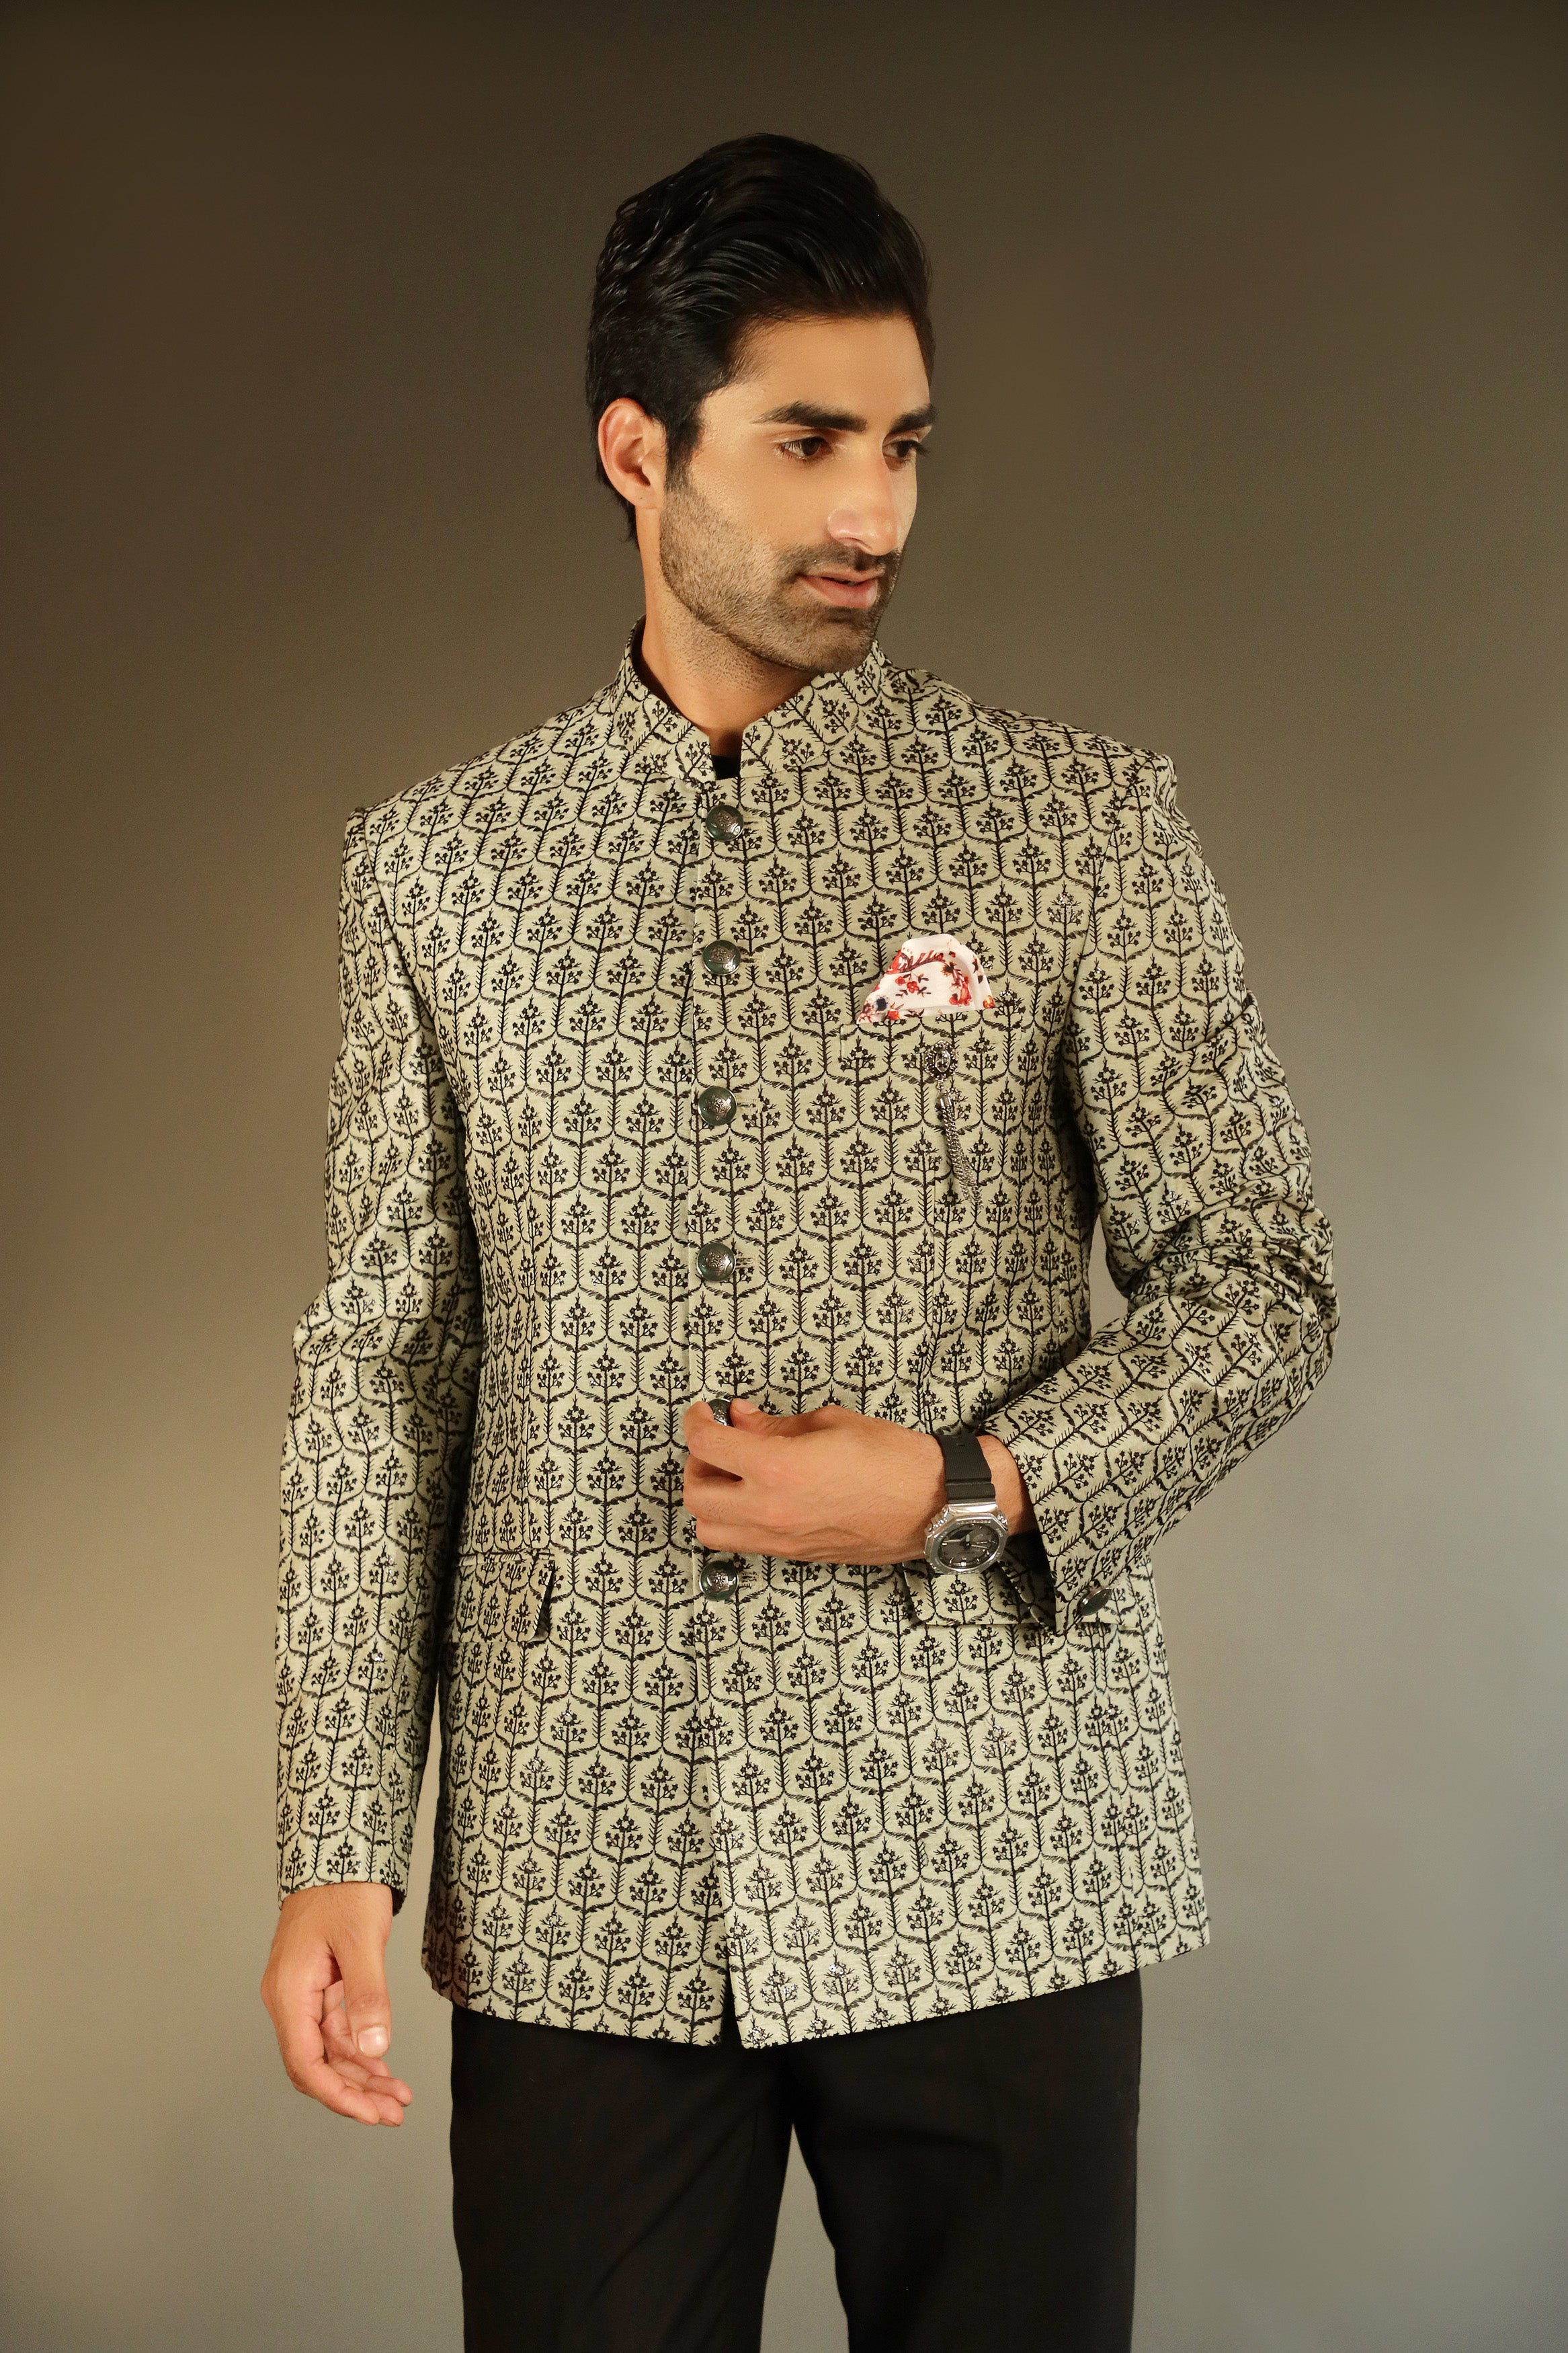 Asparagus Green with Horizontal Stitches Premium Cotton Bandhgala Designer  Suit | Jodhpuri suits for men, Designer suits, Blazer and shorts